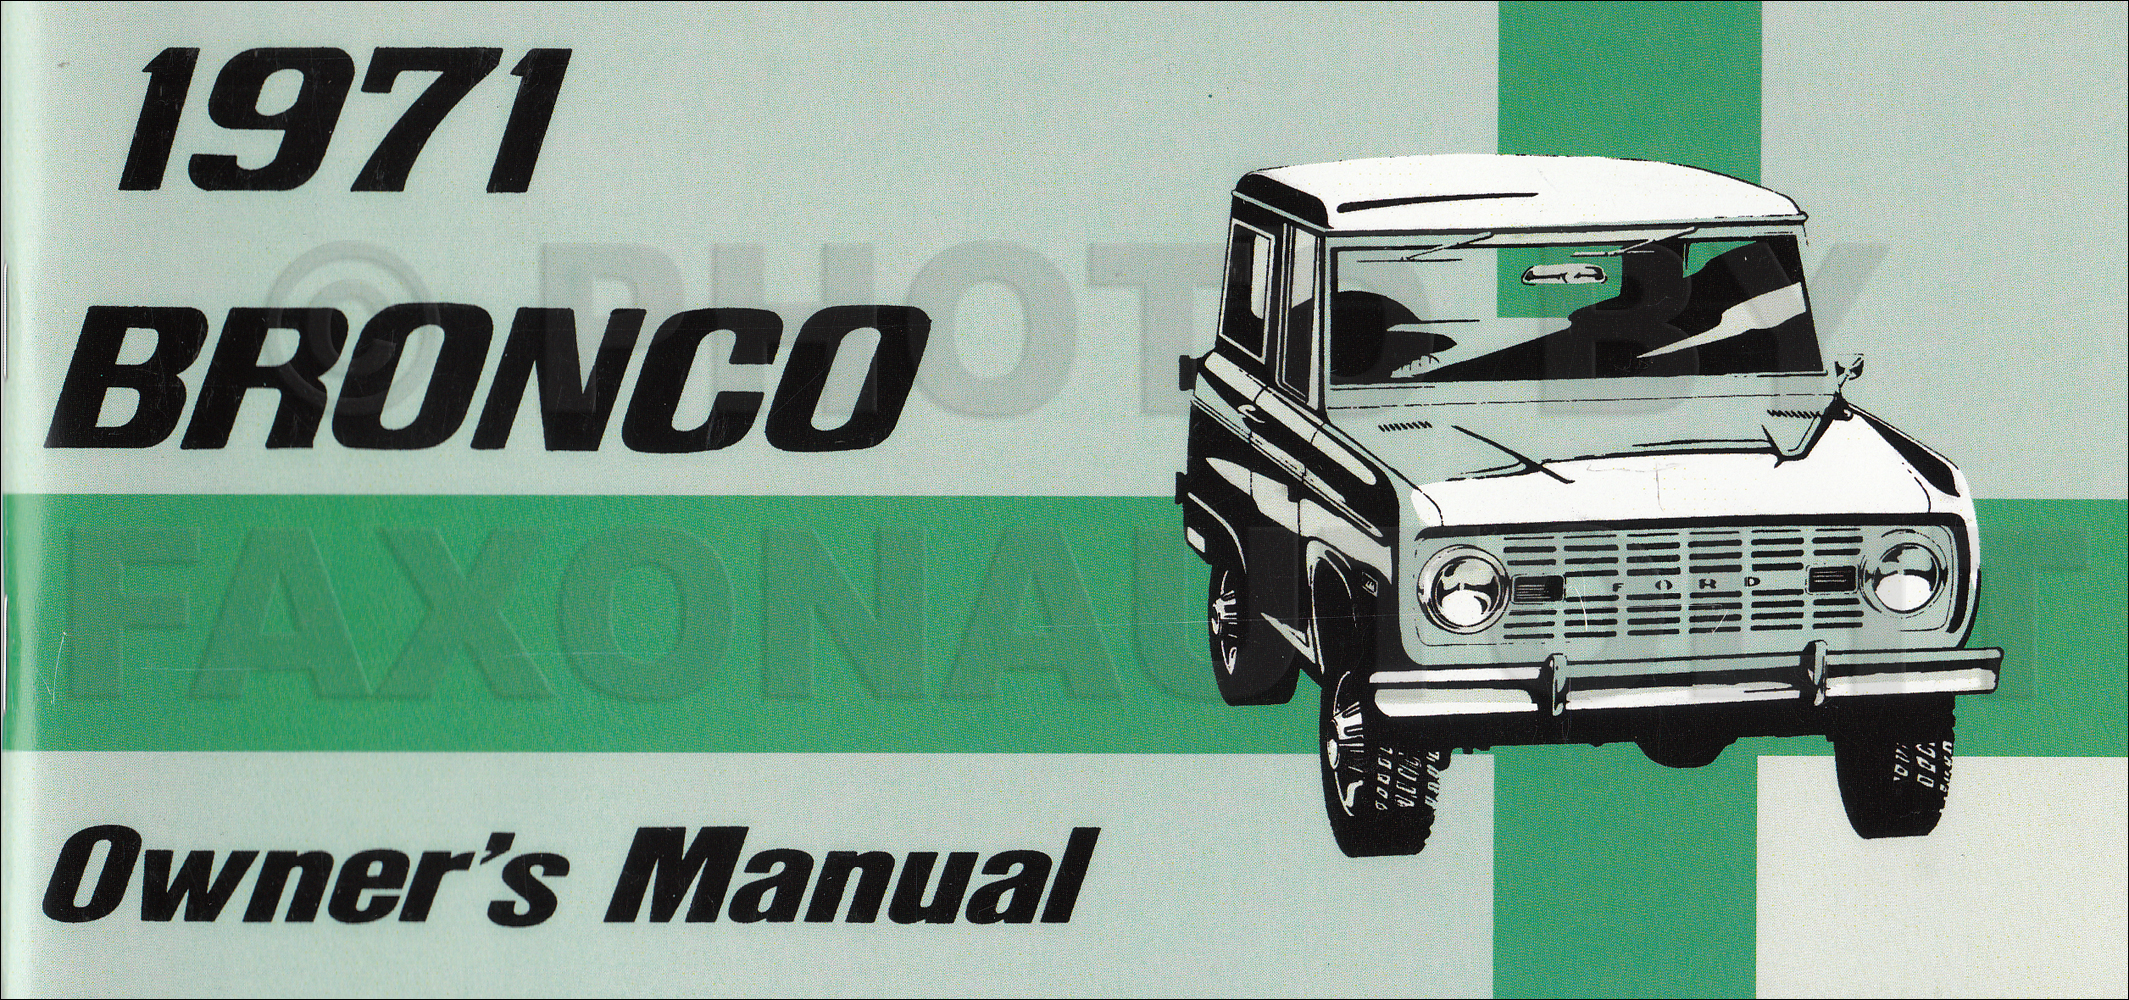 1971 Ford Bronco Owner's Manual Reprint